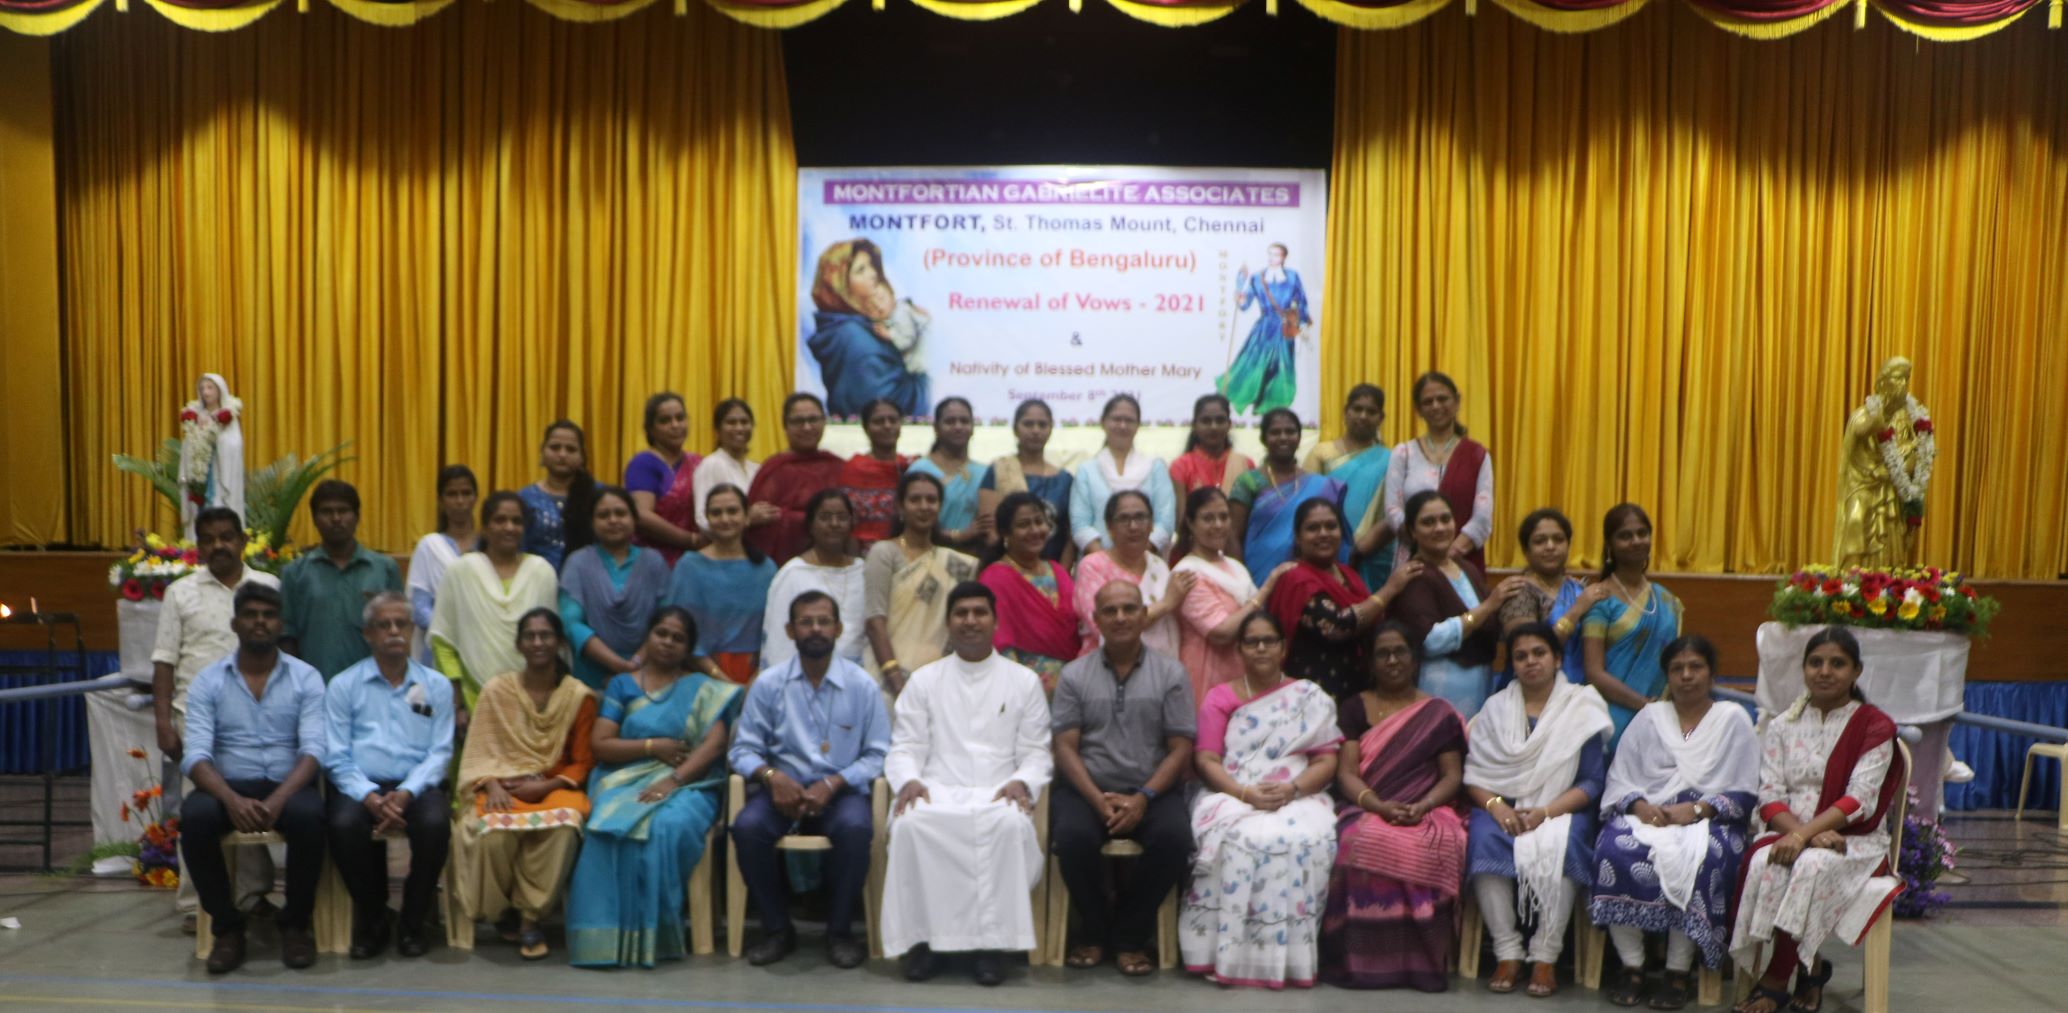 MGA BANGALORE – T-THOMAS MOUNT CHENNAI  ET MGA – 40 membres ont renouvelé leurs Consacration